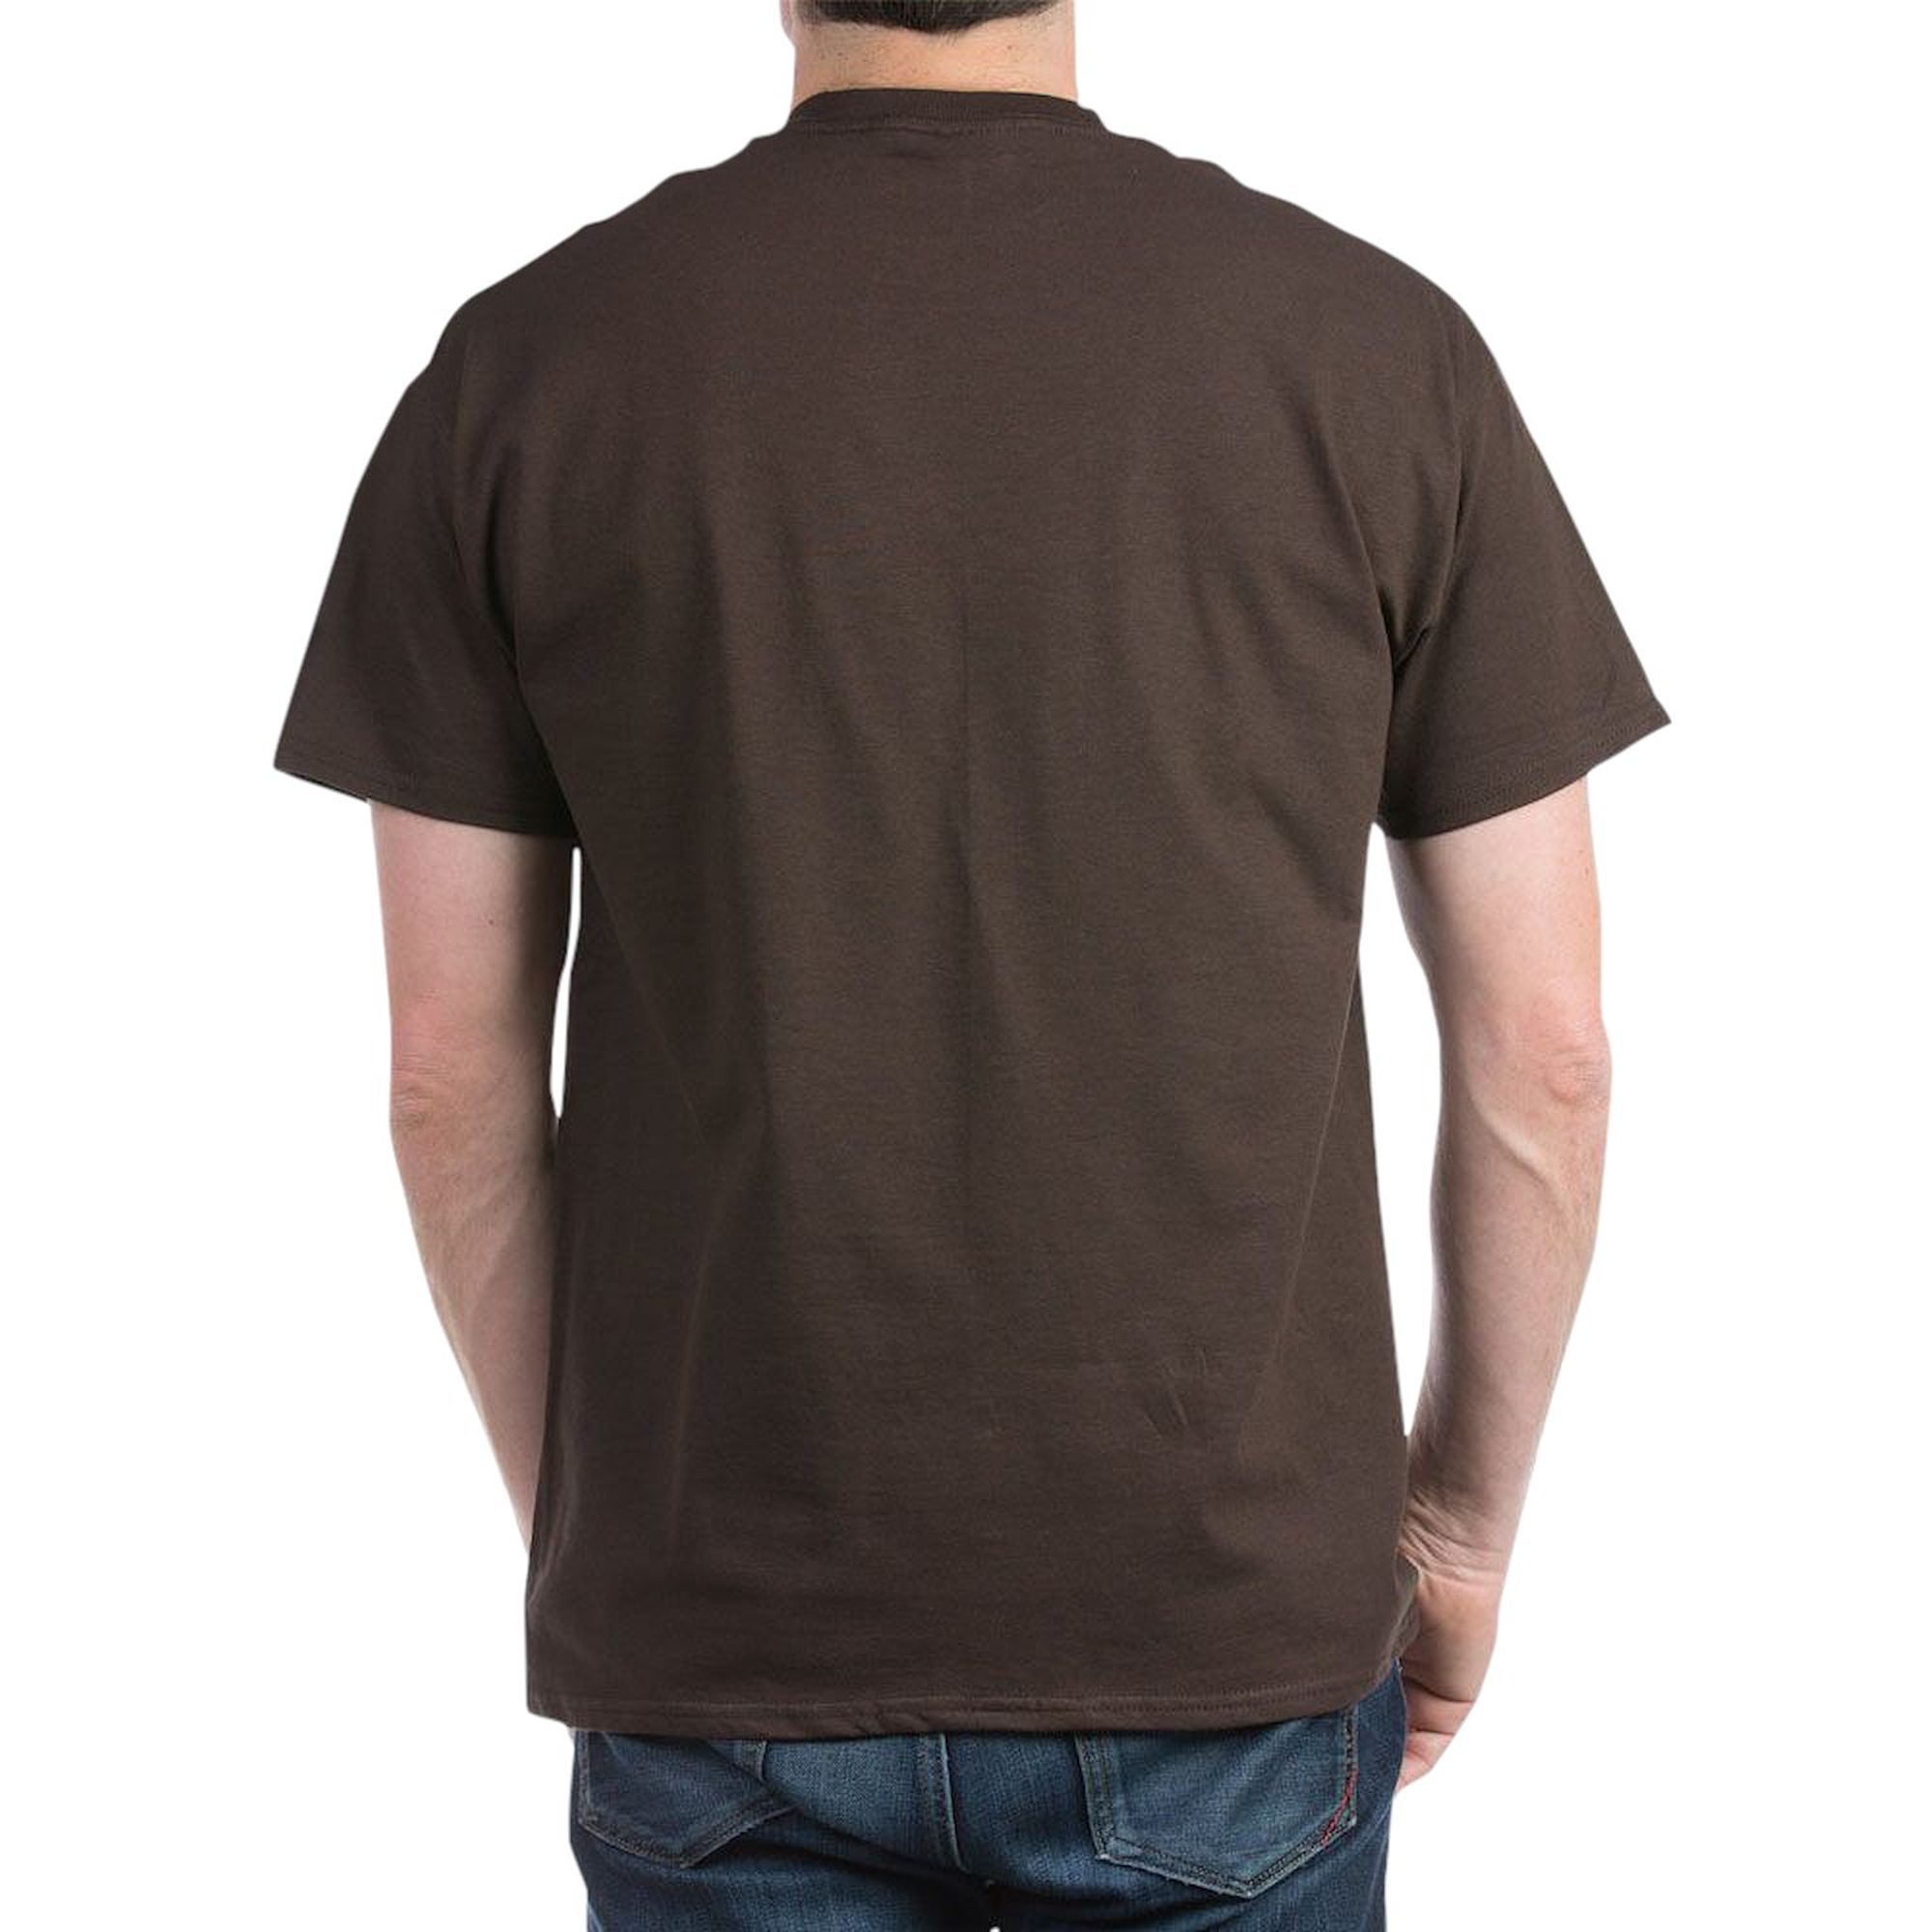 CafePress - Tall Funny Tee Shirt - 100% Cotton T-Shirt - image 2 of 4